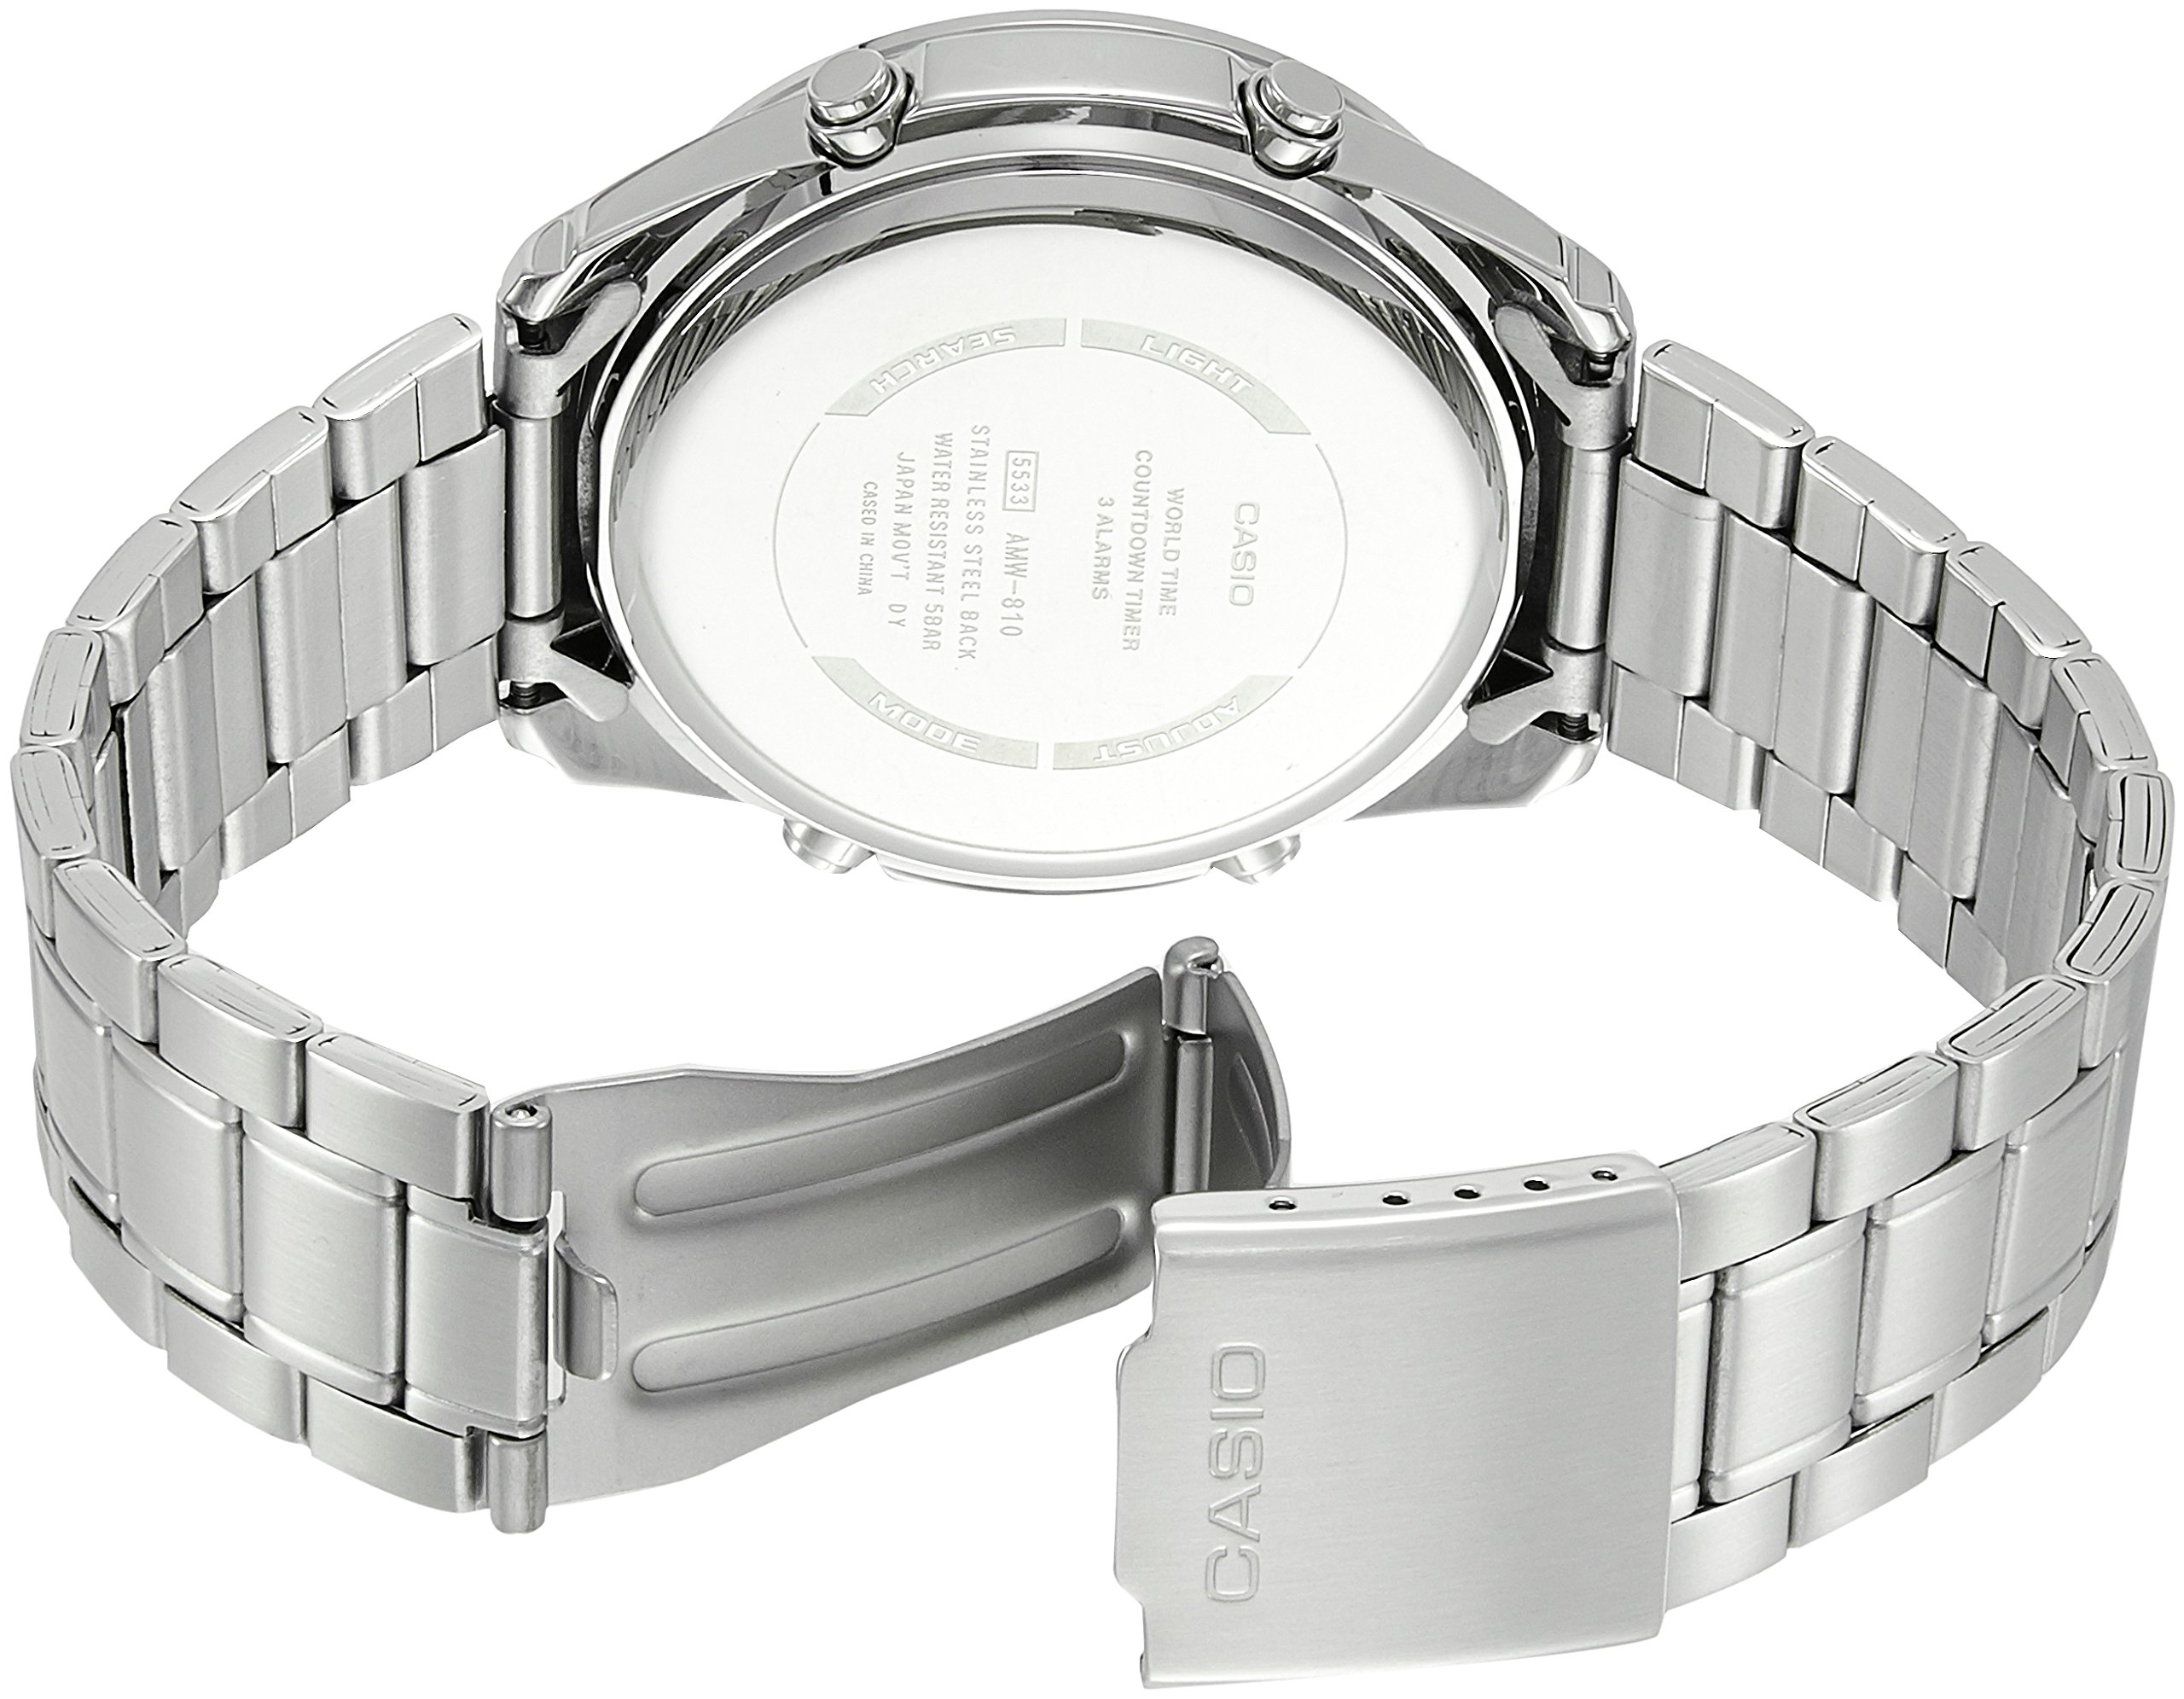 Casio AMW810D-1AV Men's Stainless Steel Active Dial Watch